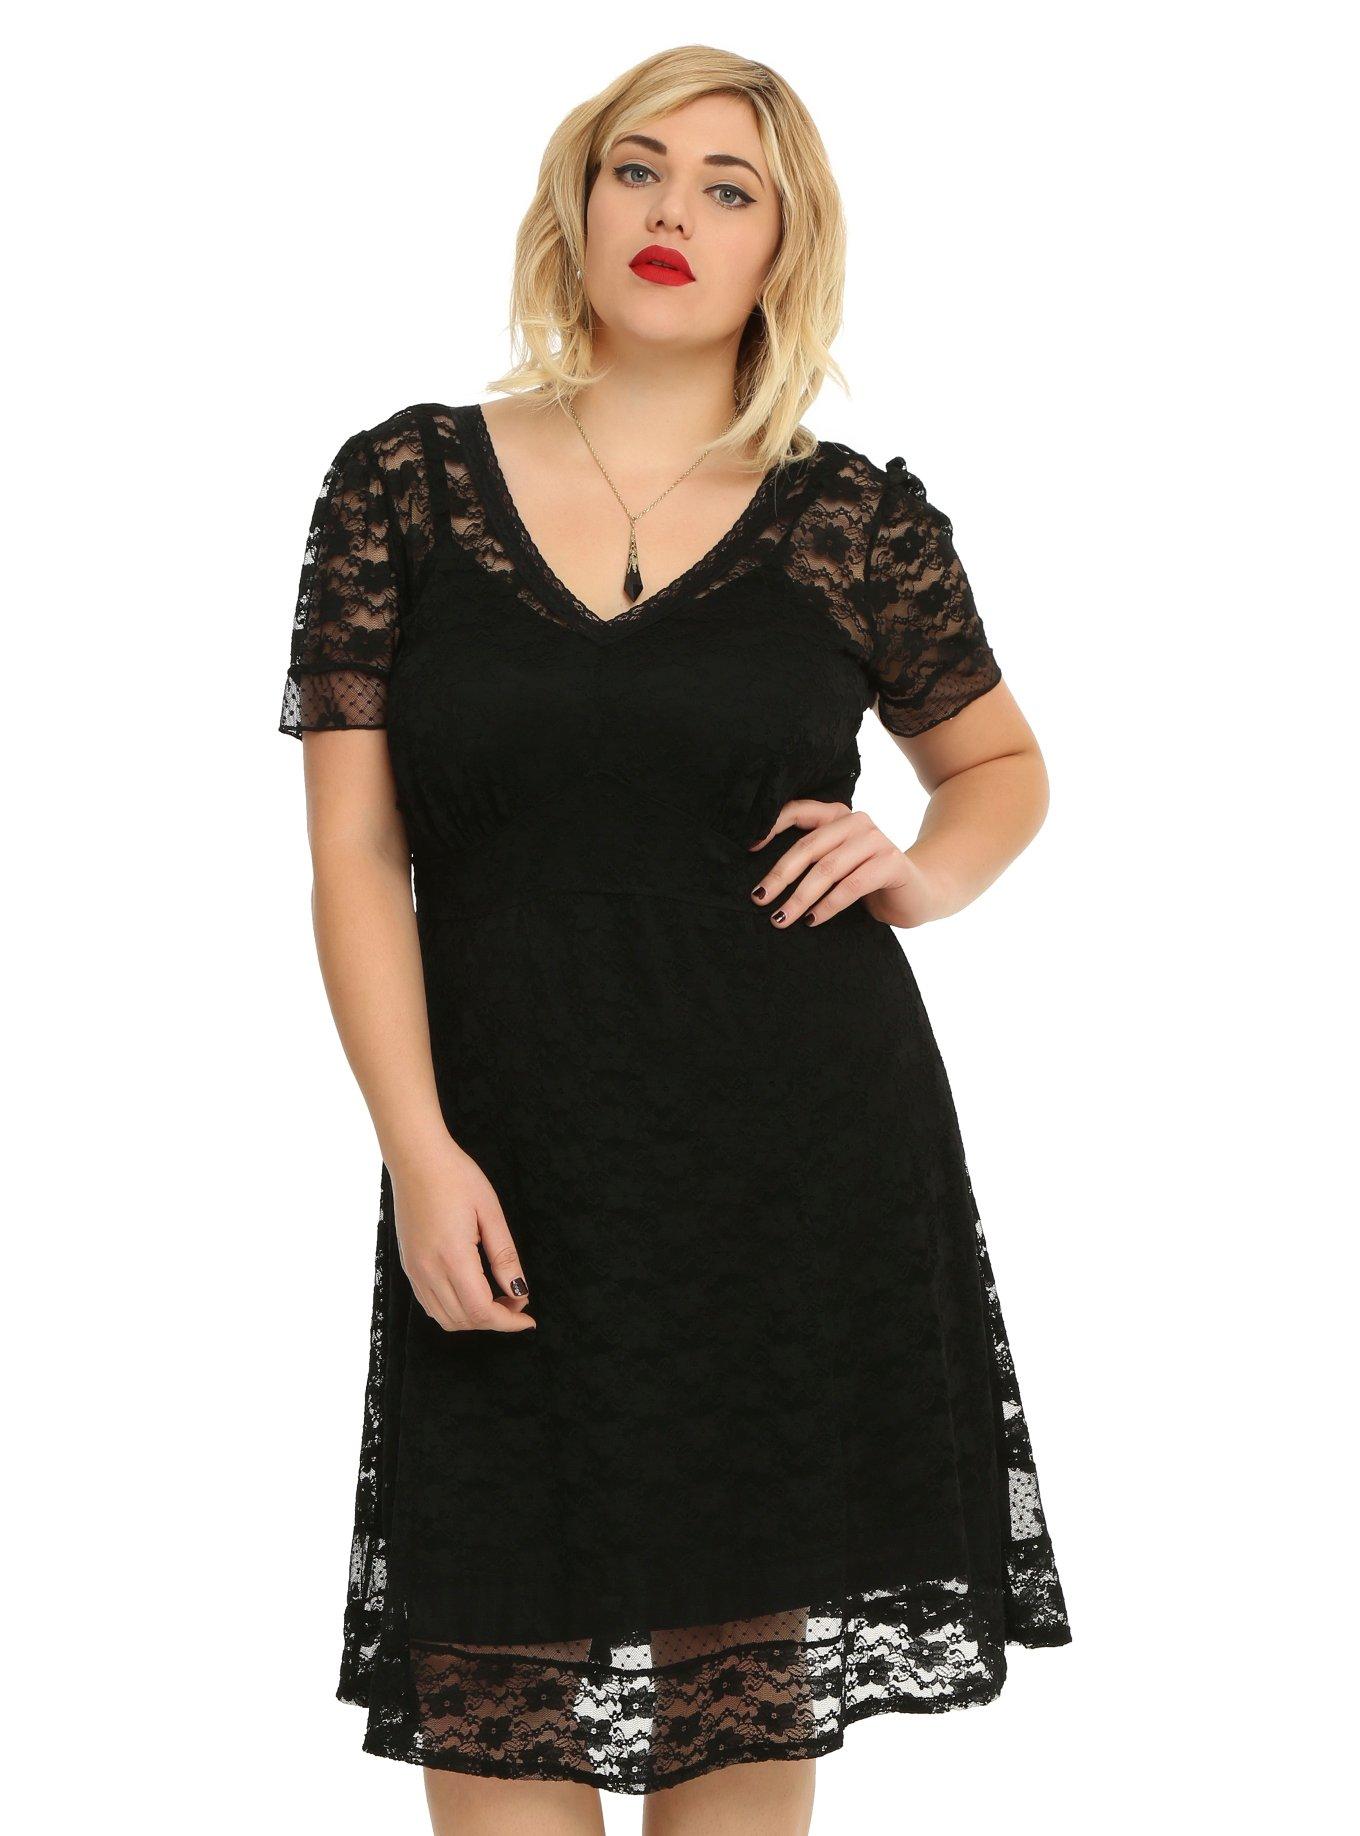 Royal Bones By Tripp Black Lace Dress Plus Size, BLACK, hi-res